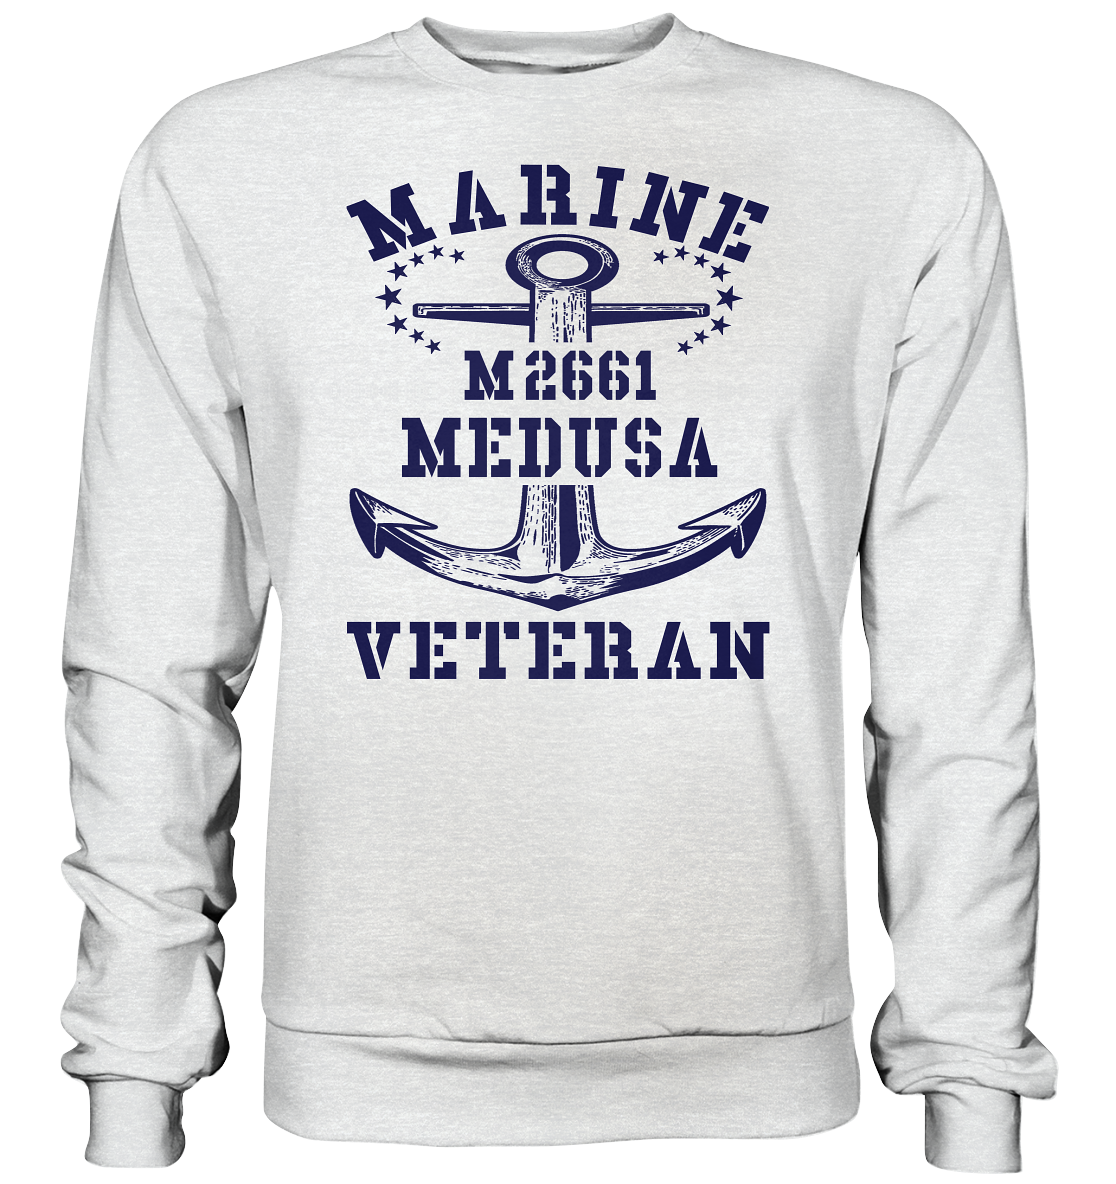 BiMi M2661 MEDUSA Marine Veteran - Premium Sweatshirt